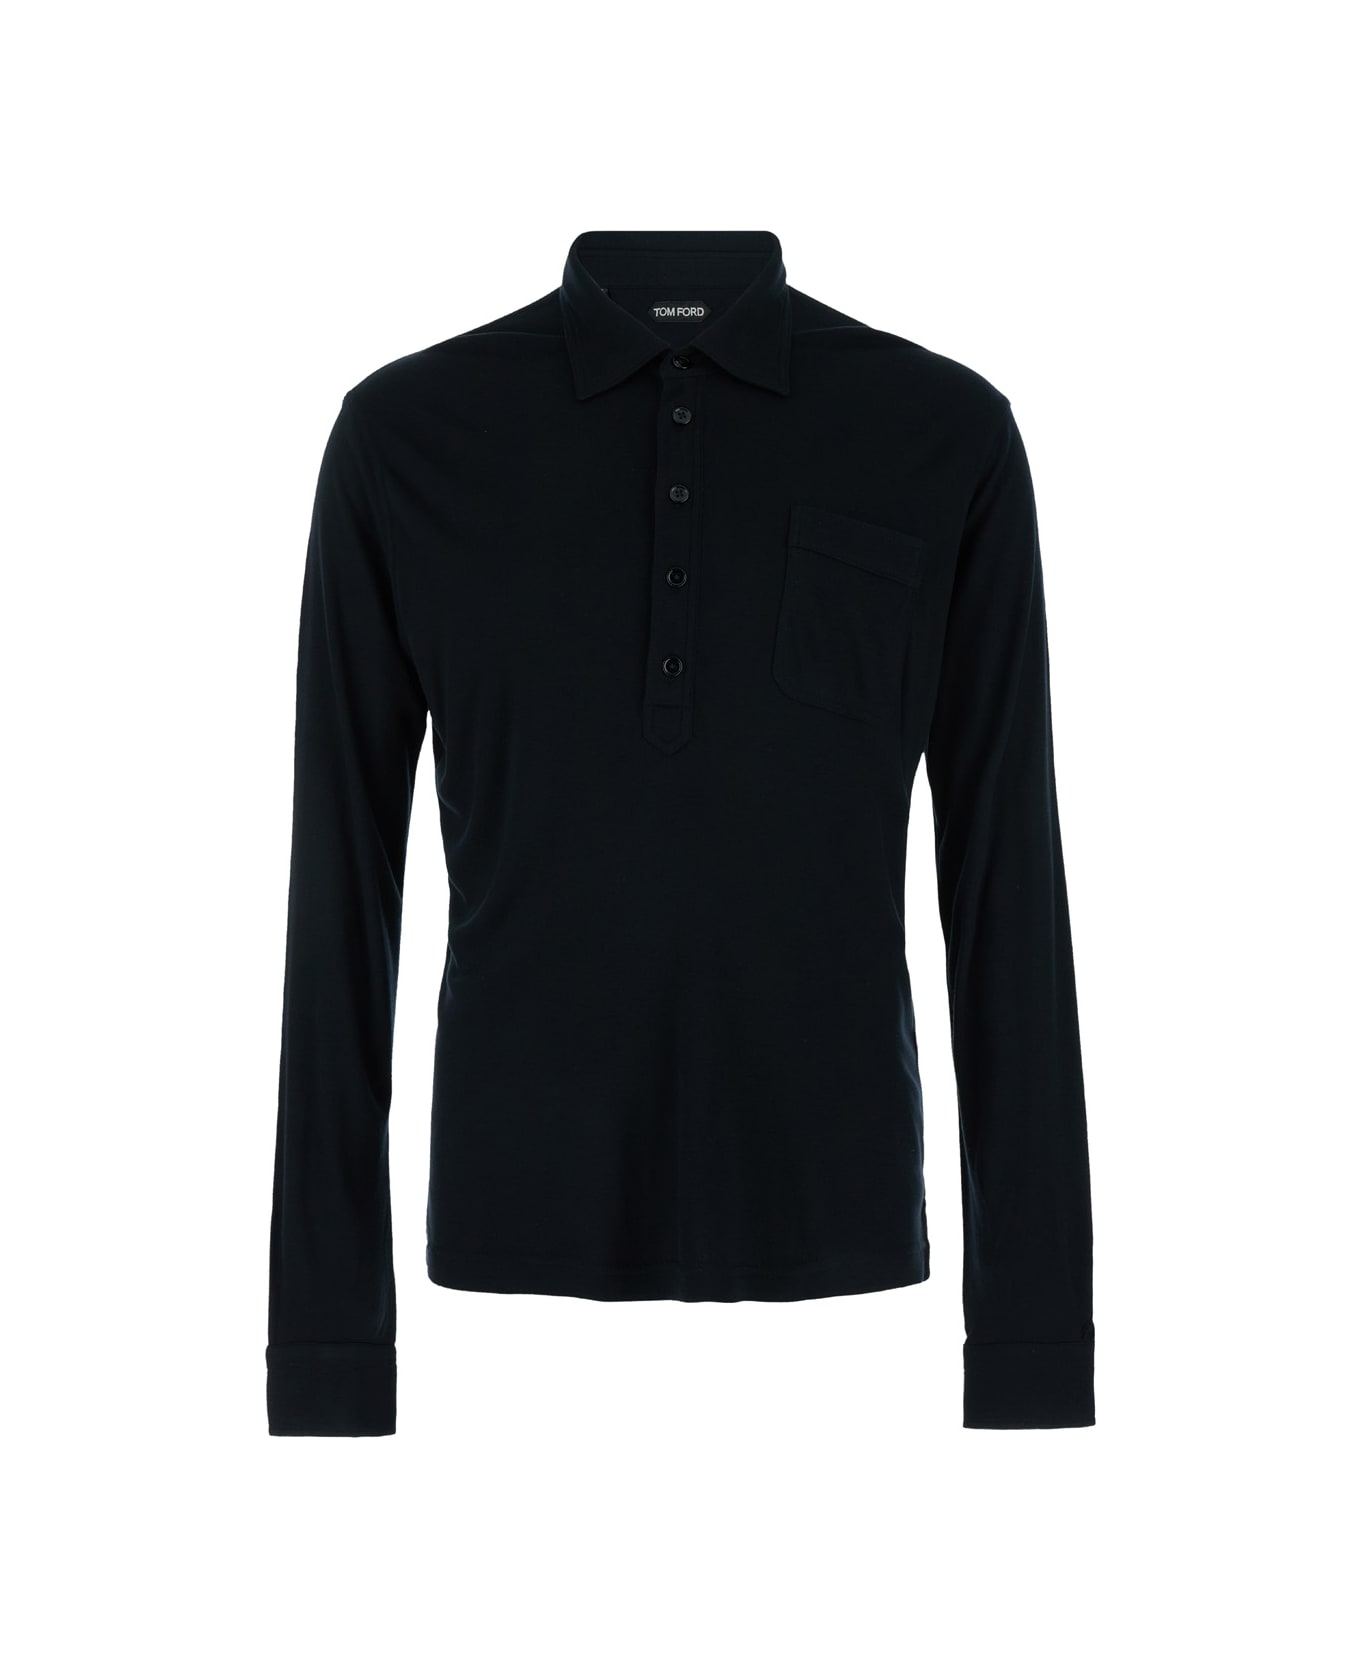 Tom Ford Black Polo Shirt In Cotton Blend Man - Black